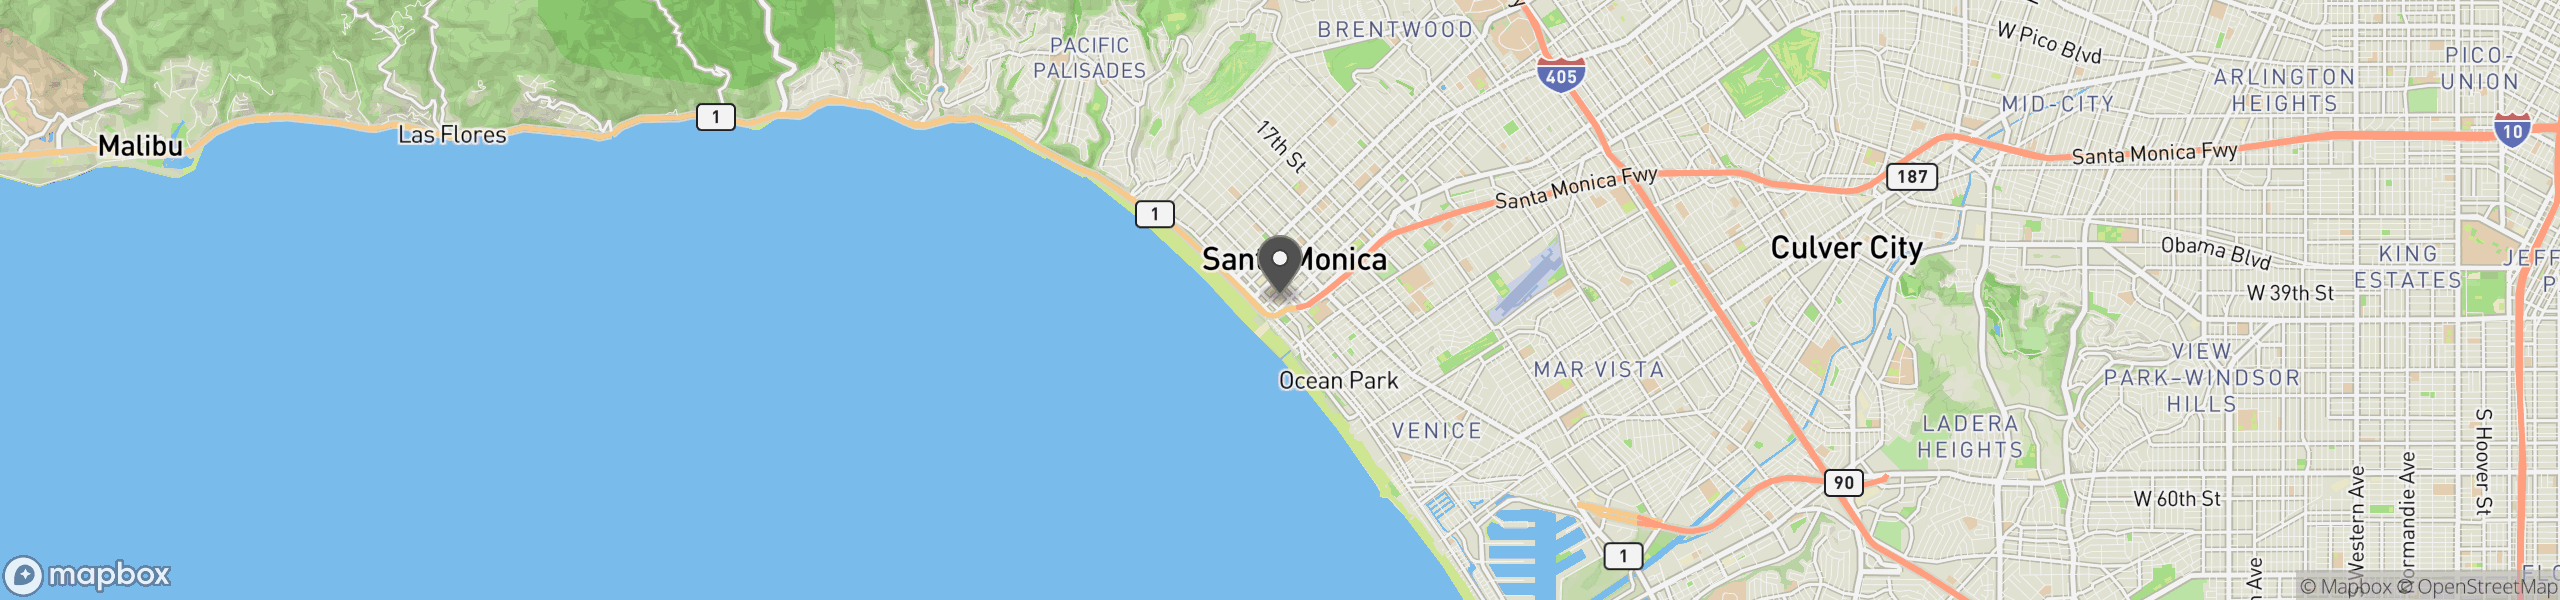 Santa Monica, CA 90401